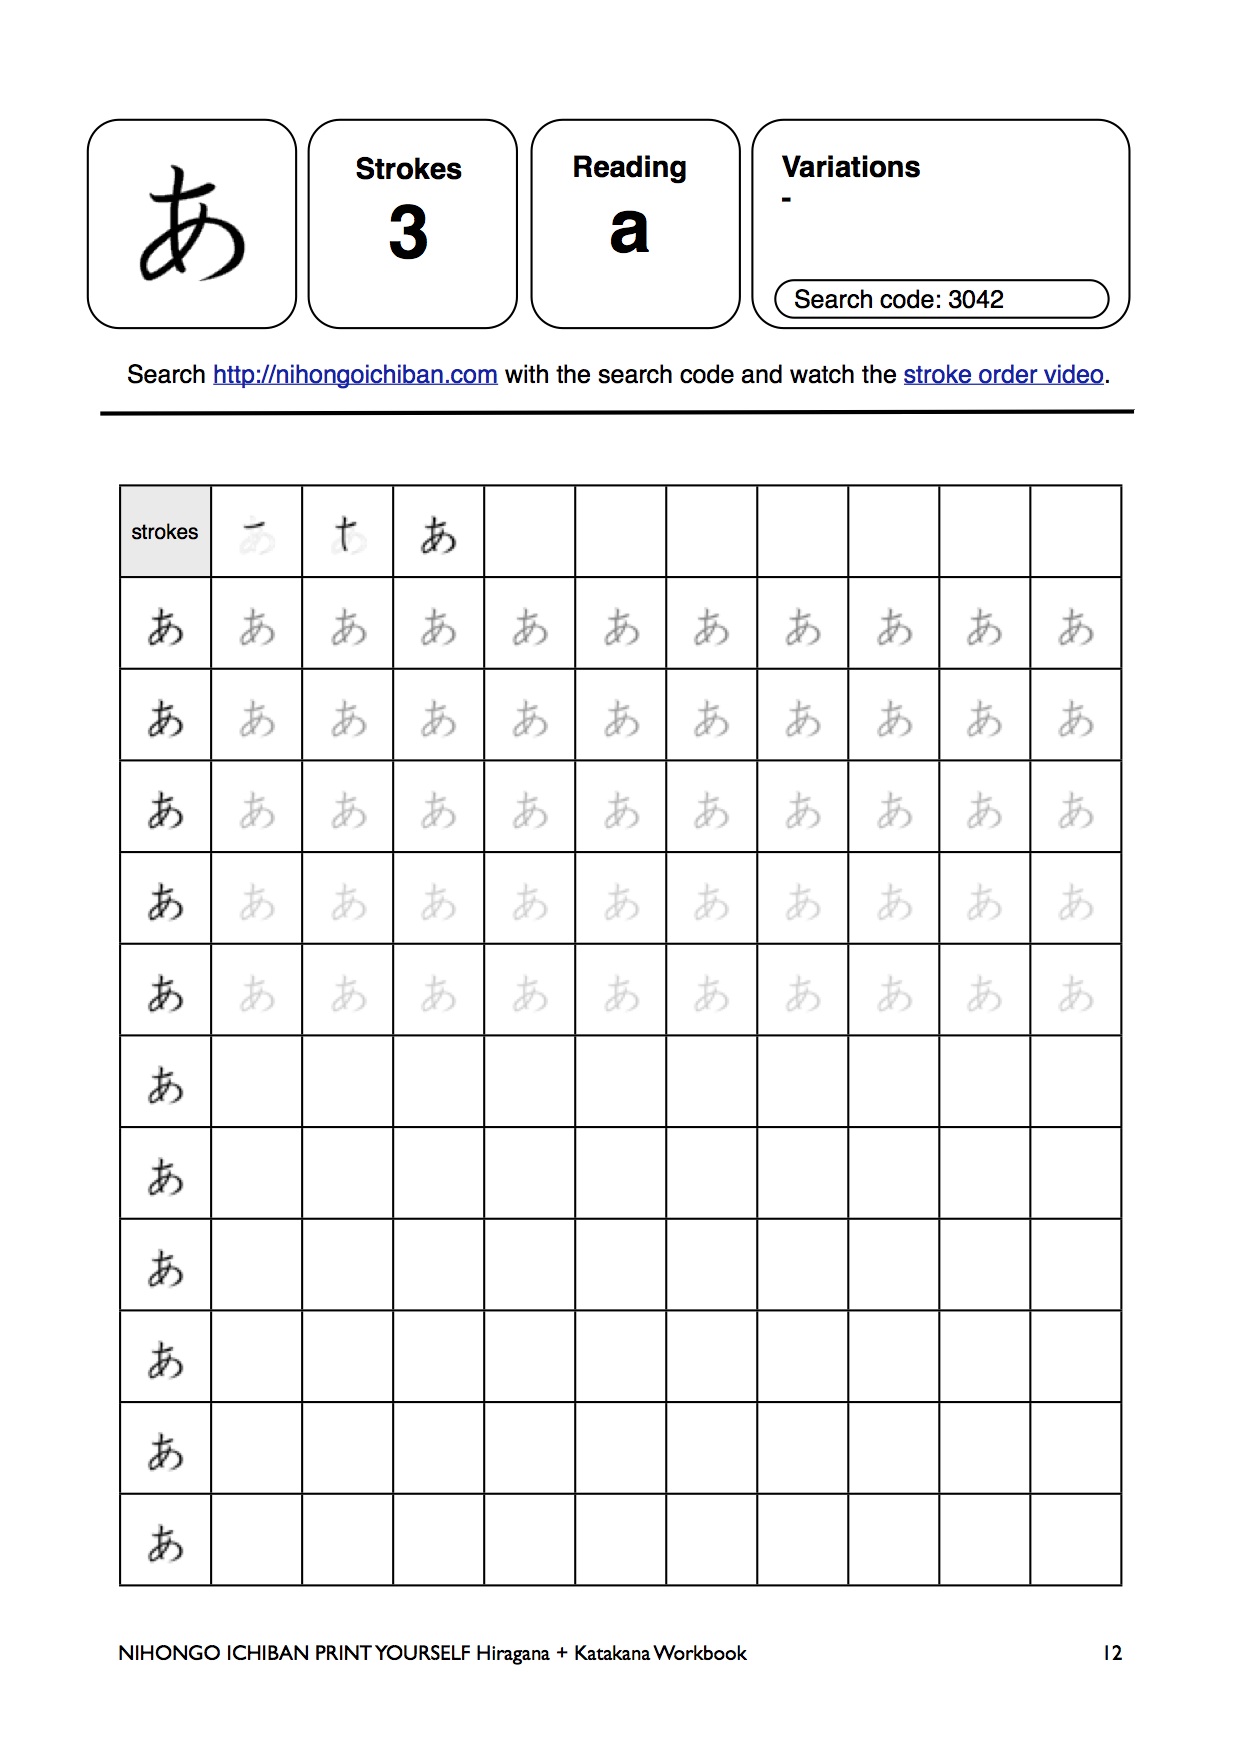 hiragana katakana workbook and practice writing hiragana on worksheets ...